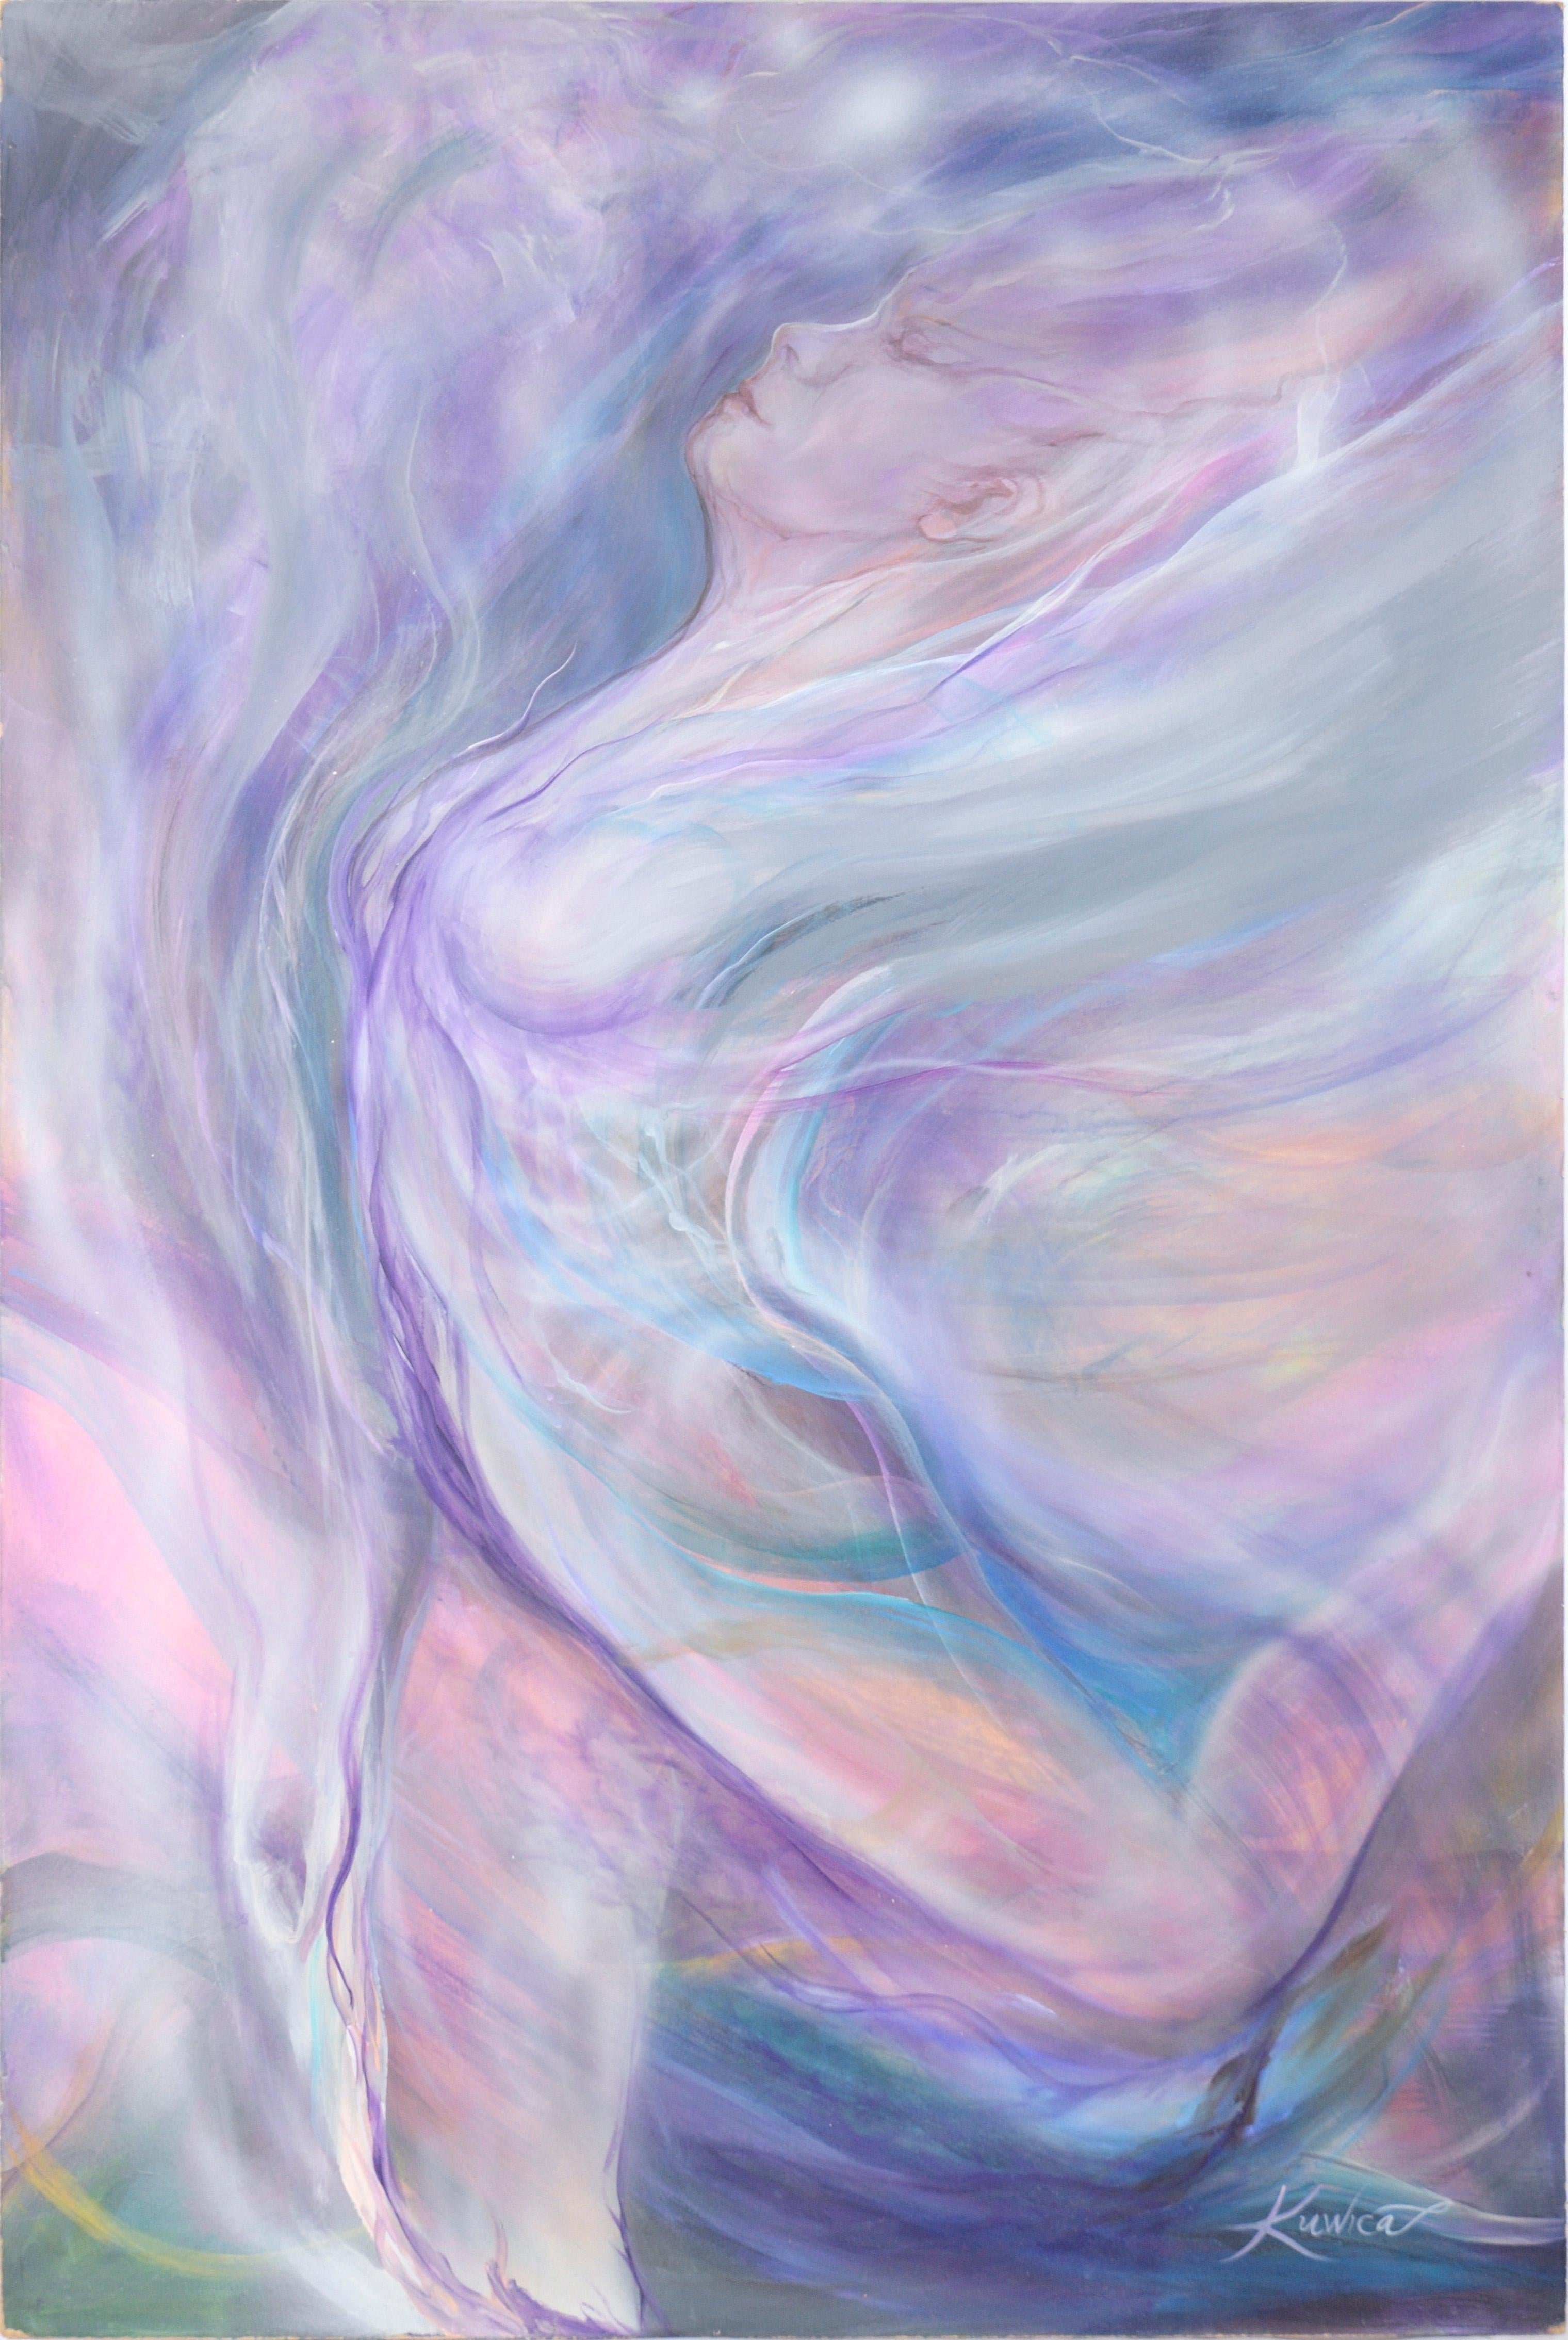 Kimberlee Kuwica Nude Painting - The Cosmic Dance - Visionary Figurative Nude Composition in Acrylic on Masonite